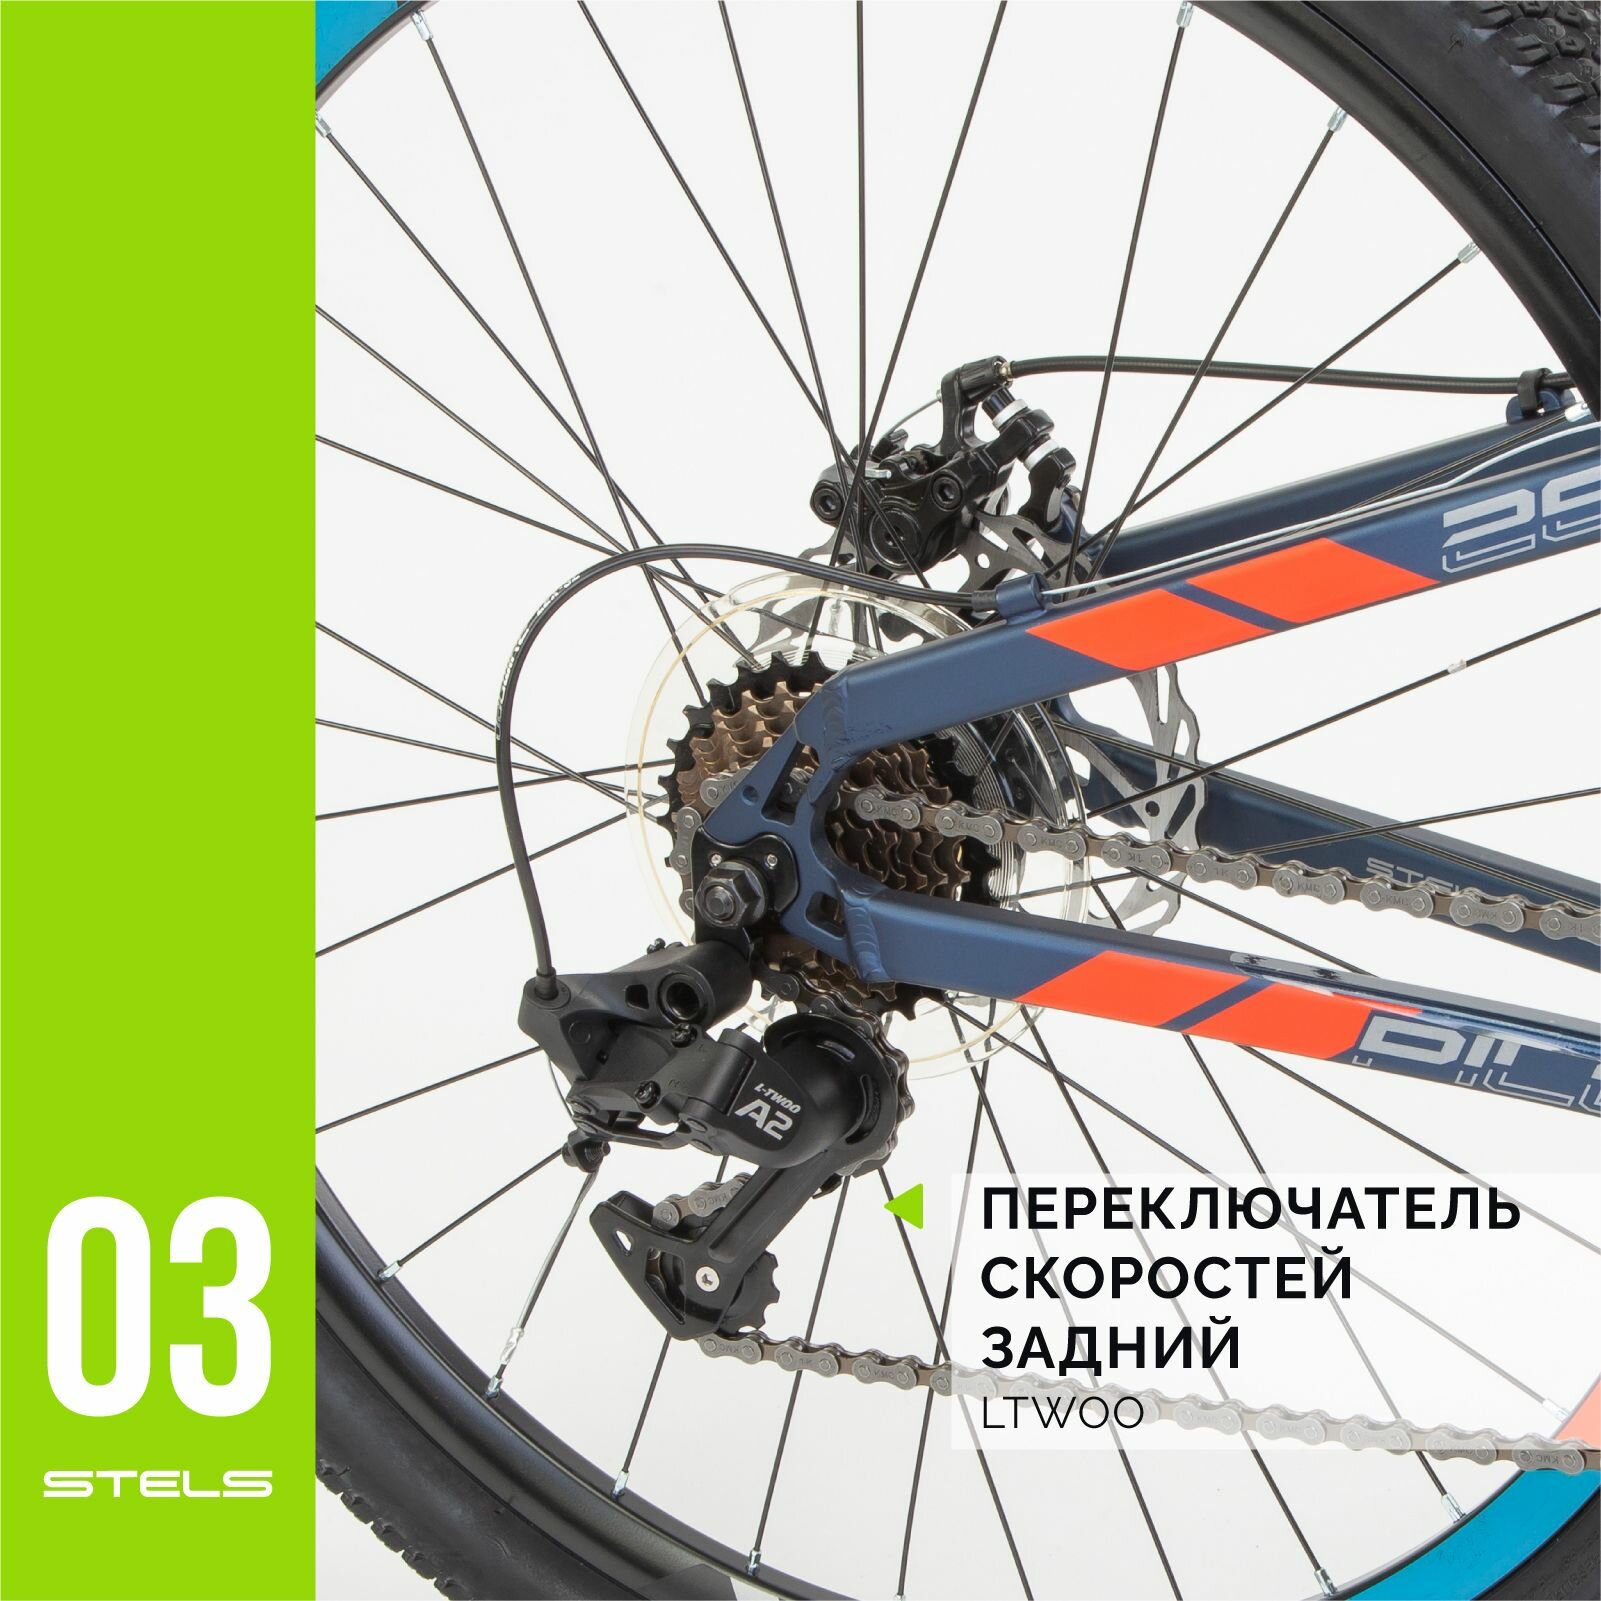 Велосипед складной Pilot-950 MD 26" V011, Тёмно-синий, рама 17.5"